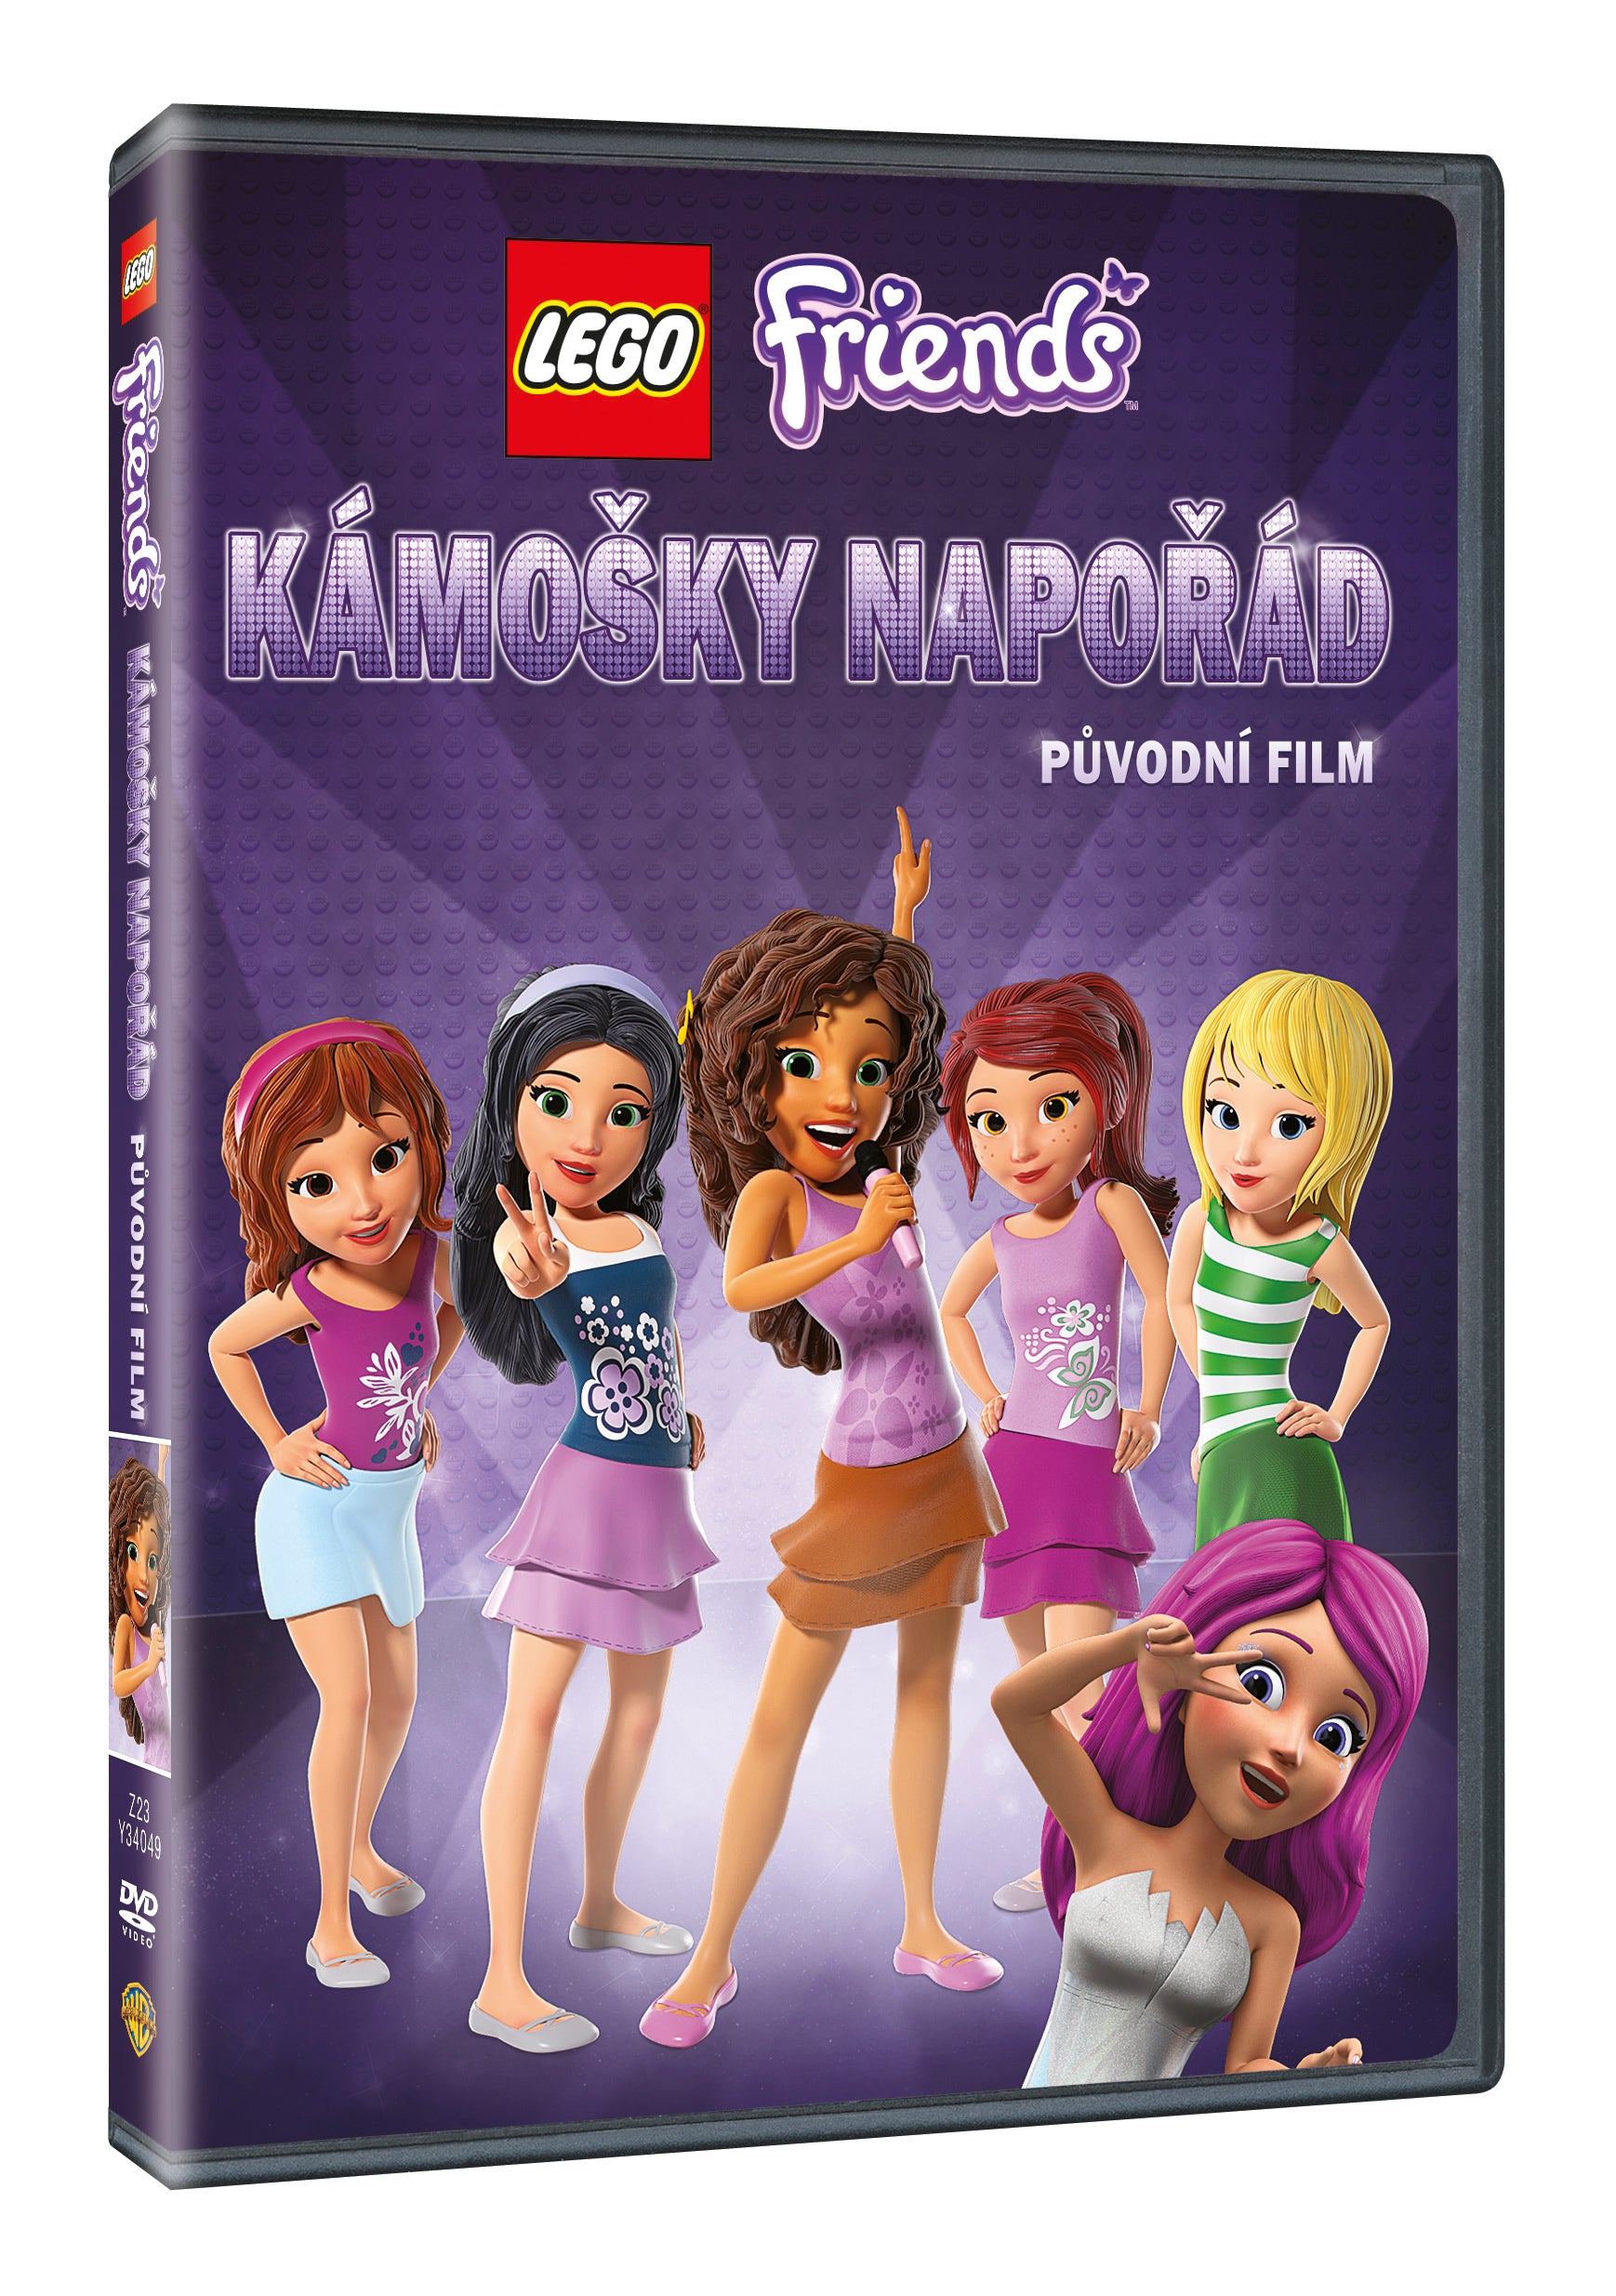 Lego Friends: Kamosky naporad DVD / LEGO Friends: Girlz 4 Life